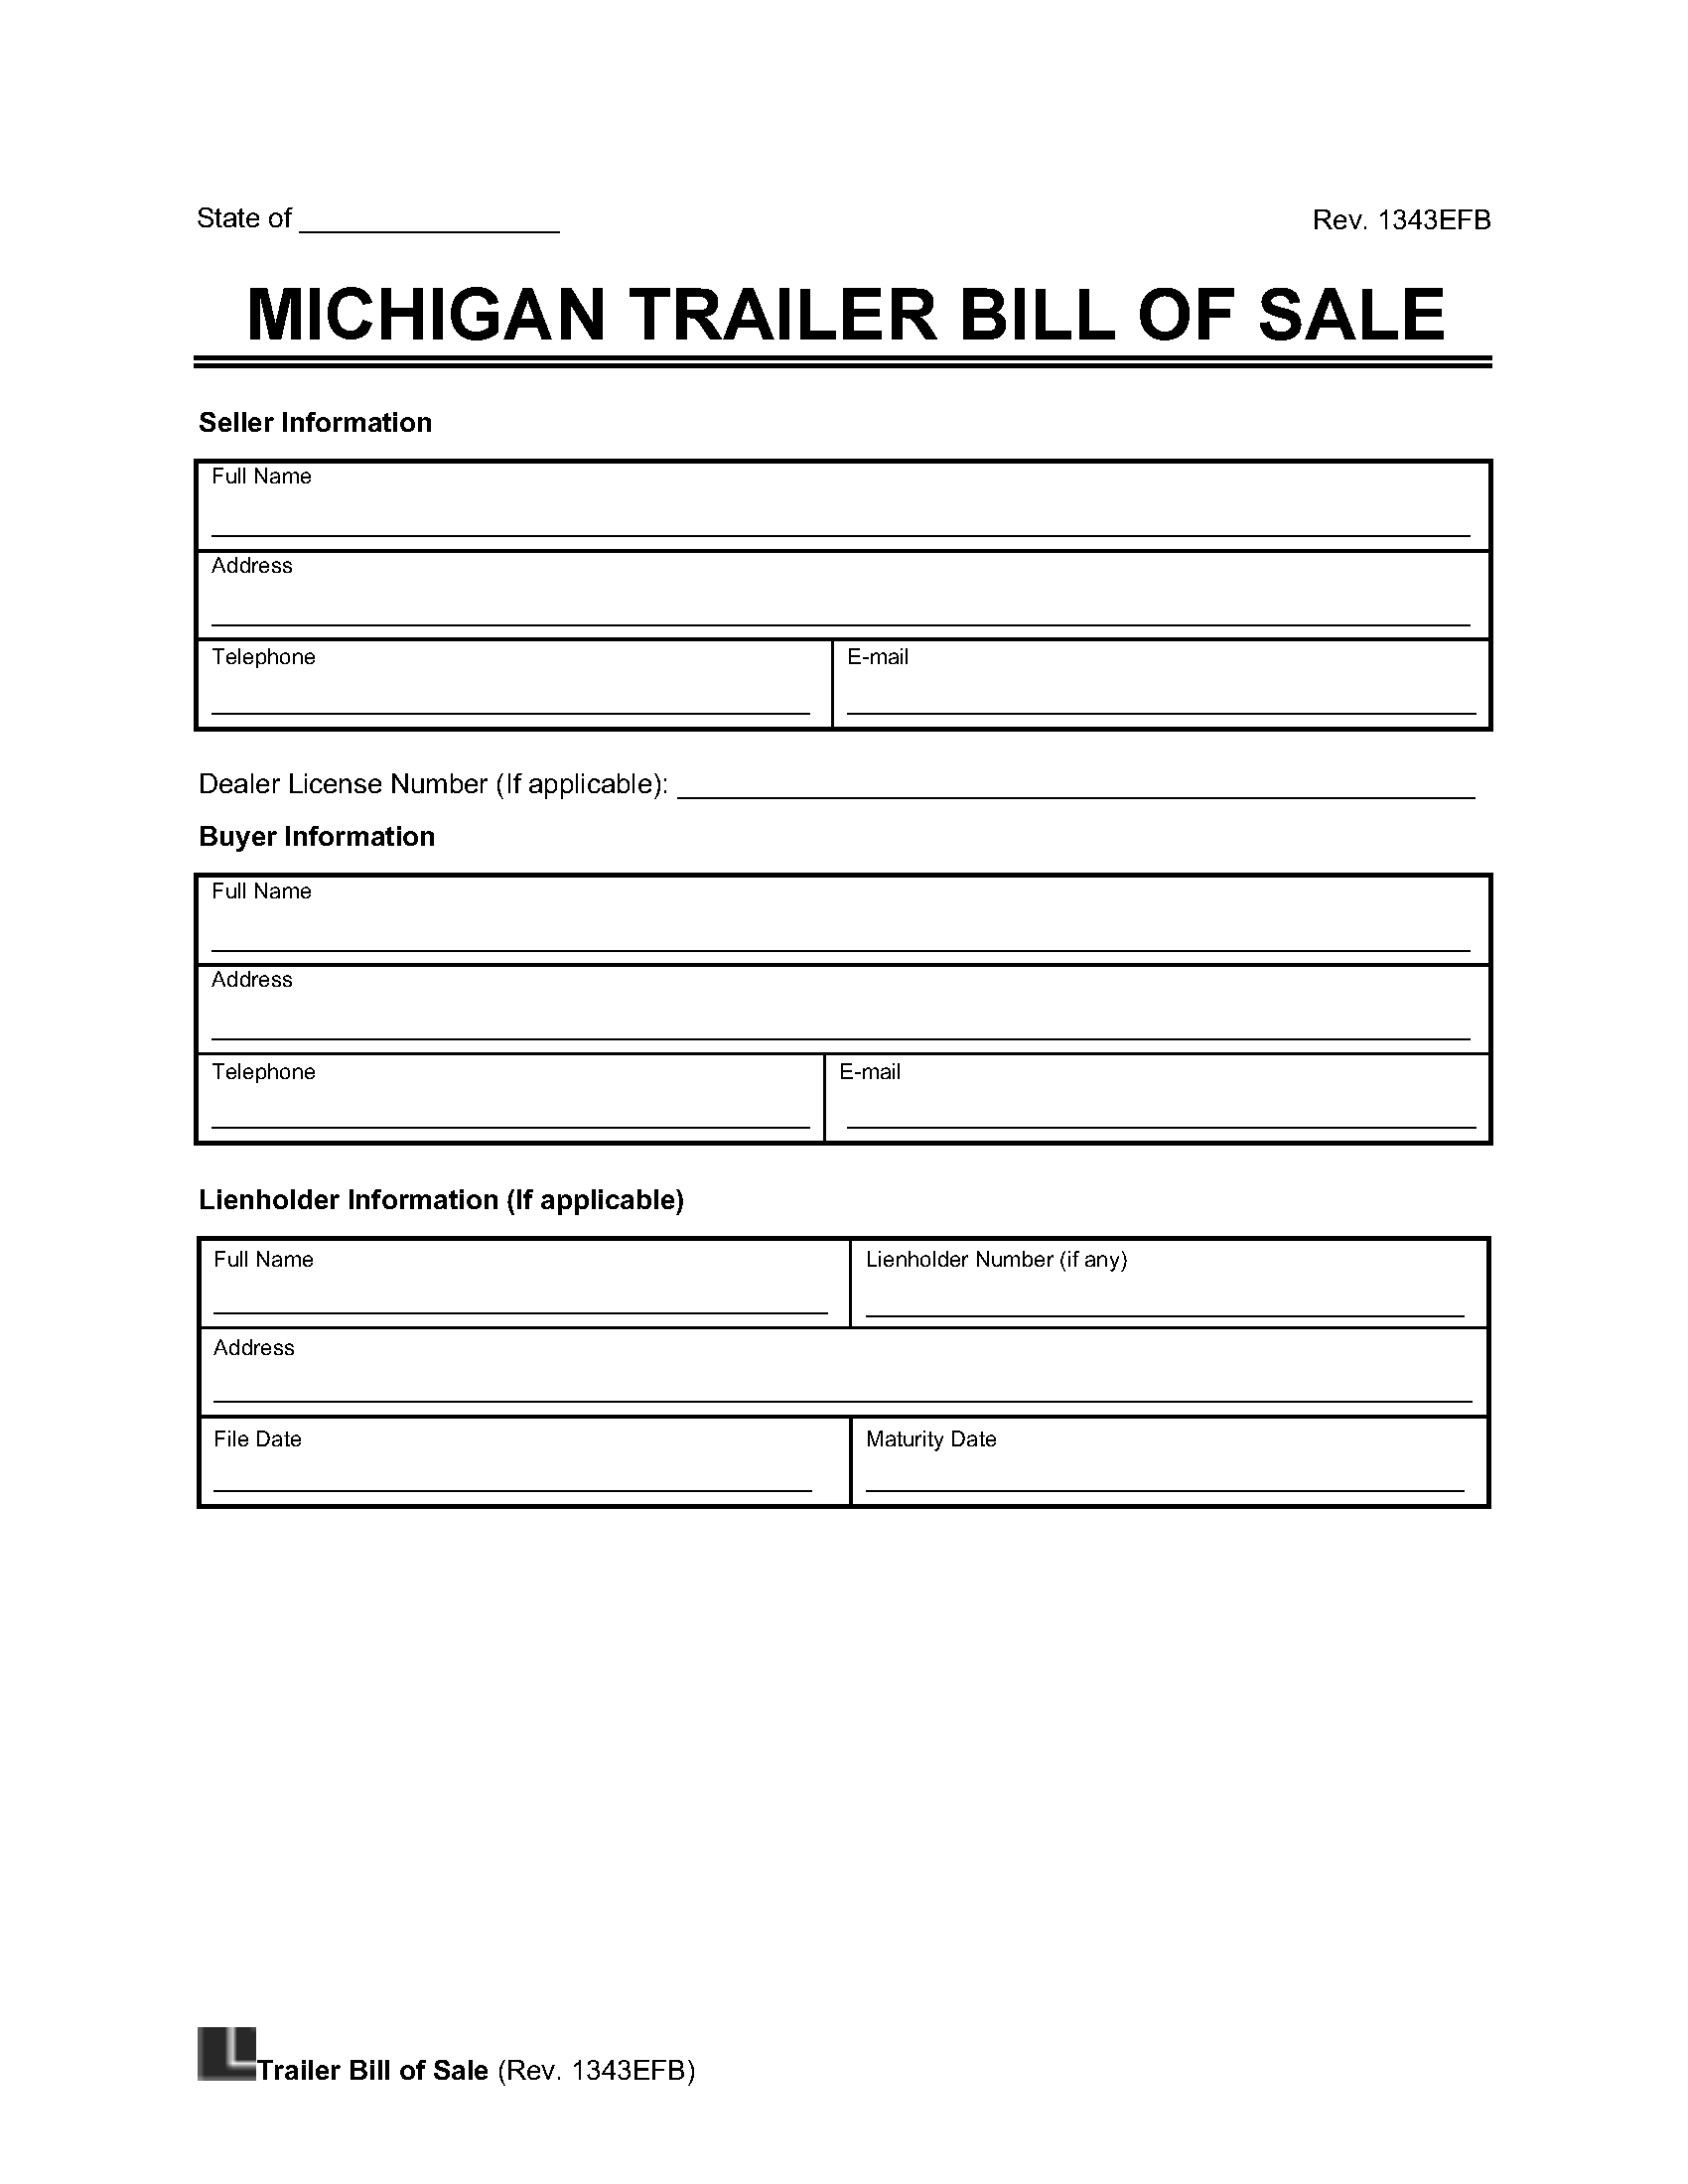 Michigan Trailer Bill of Sale screenshot